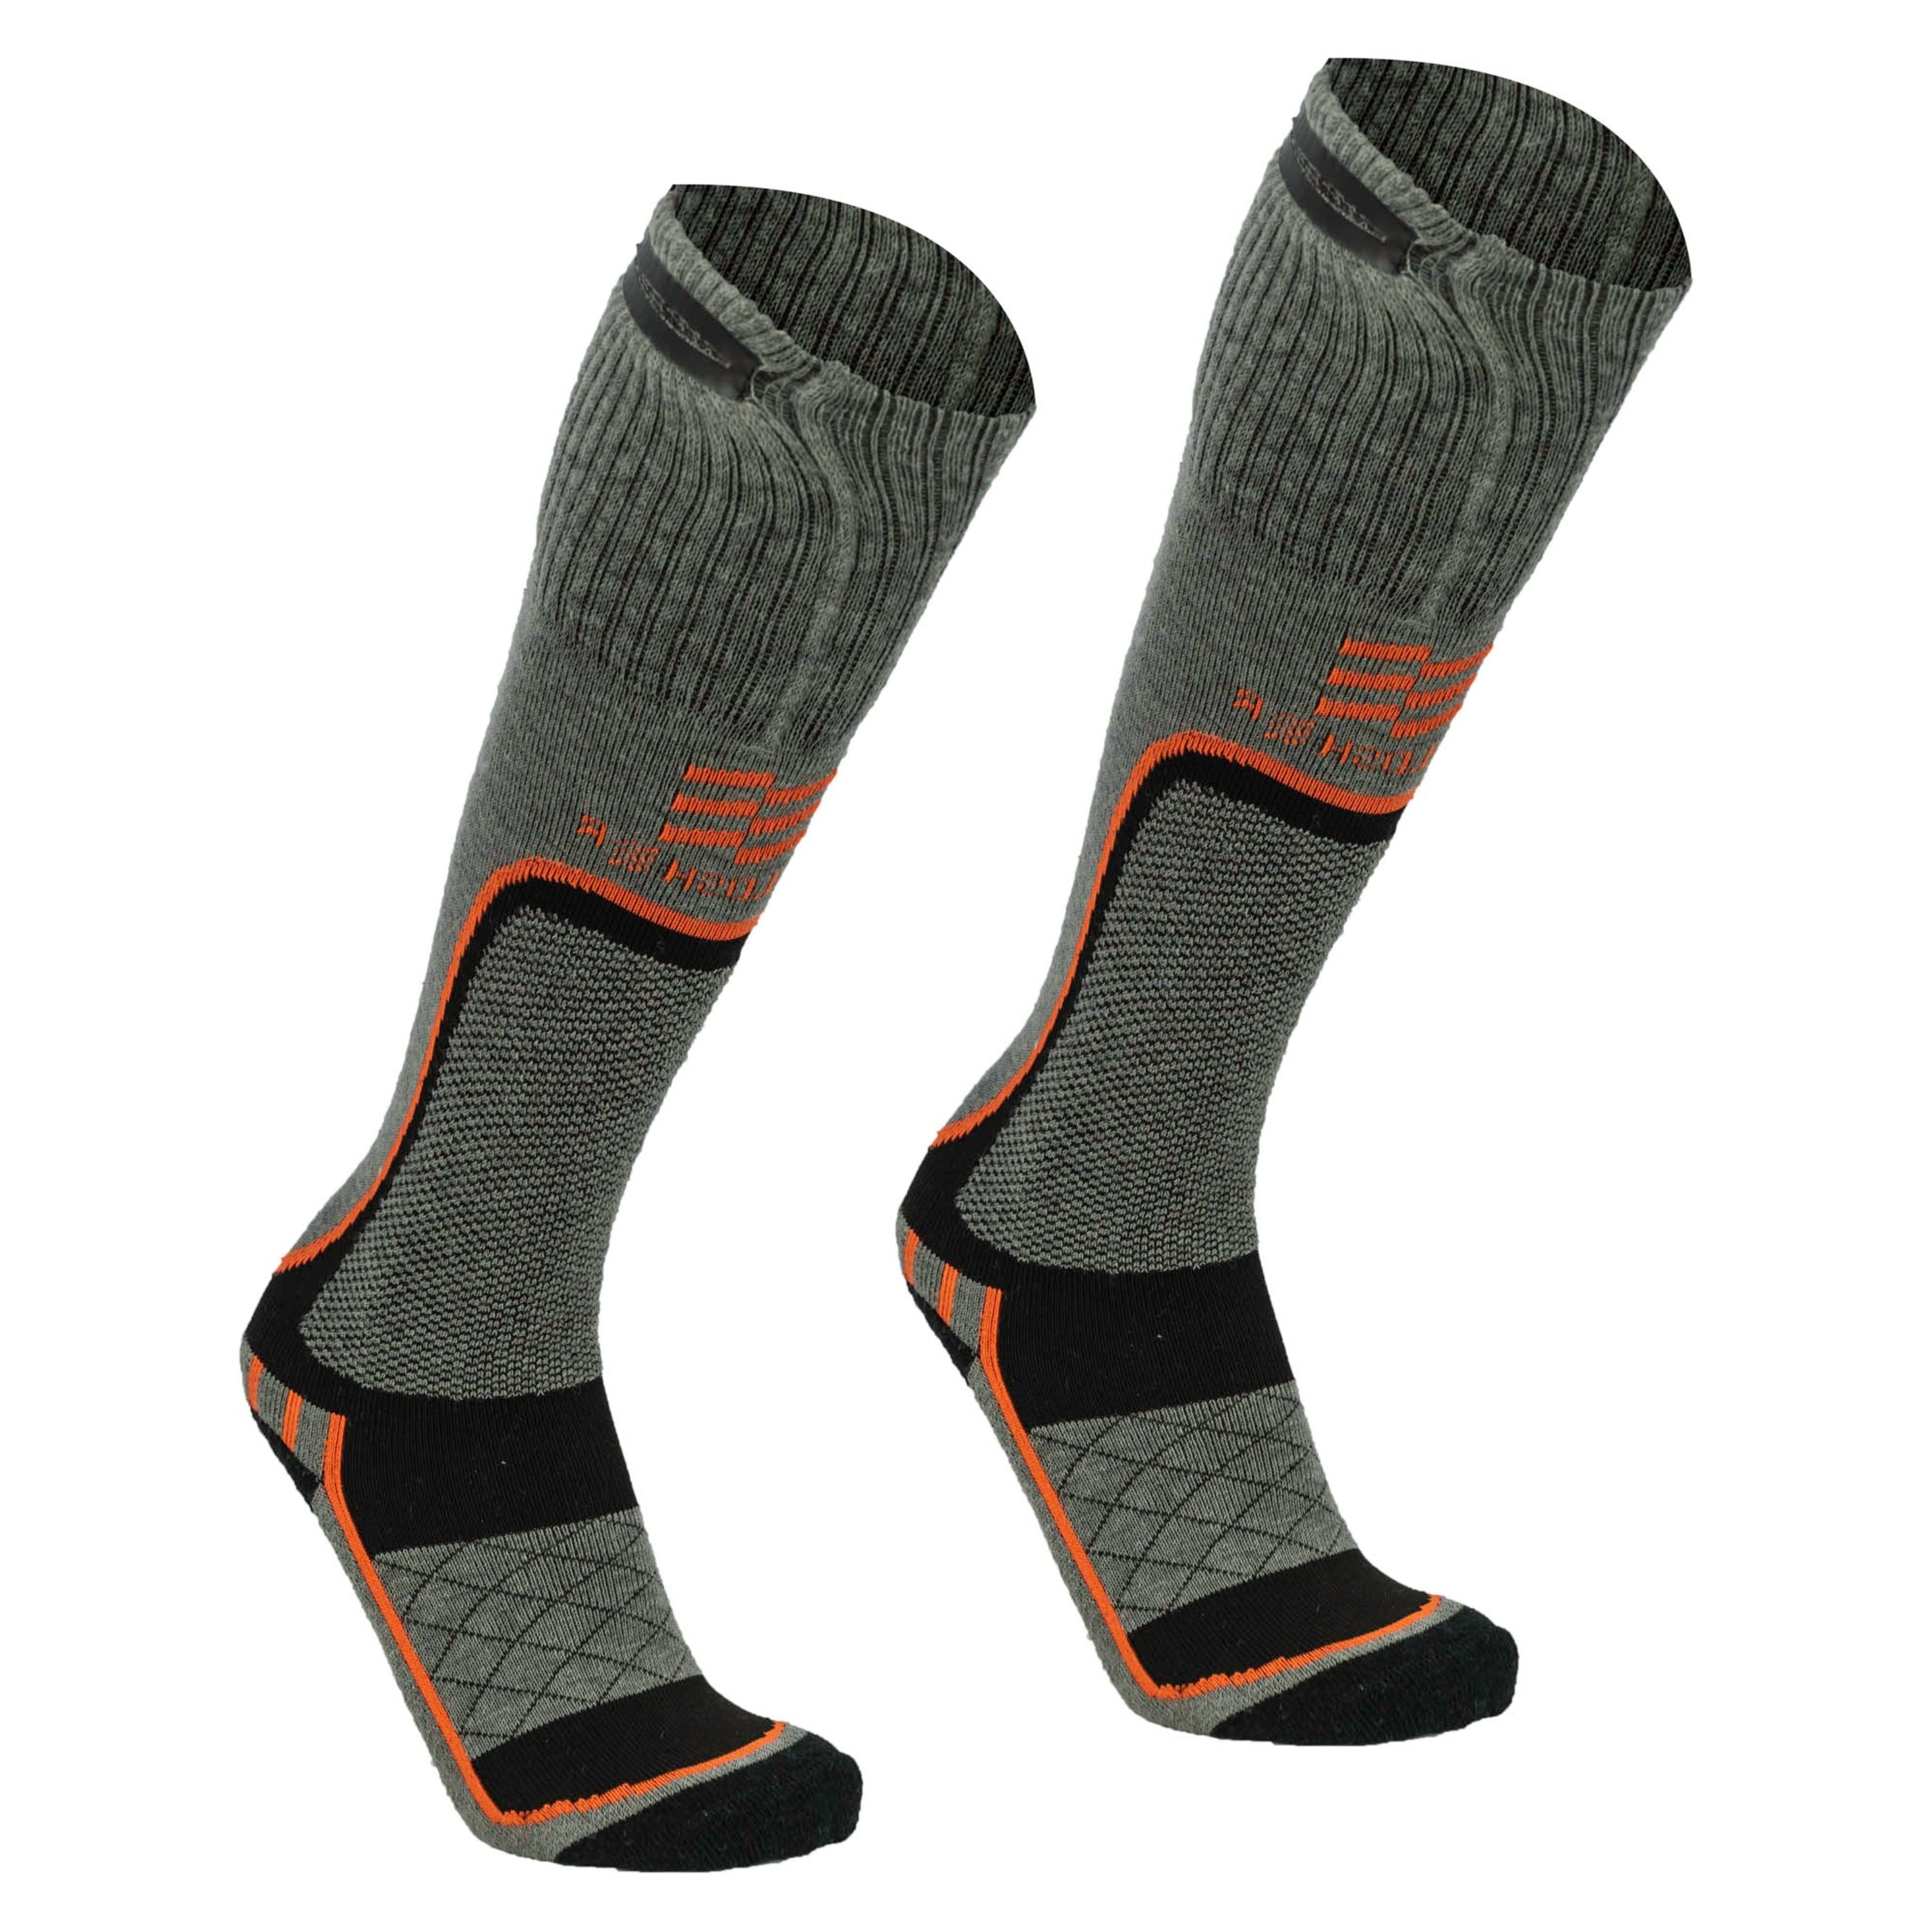 Chaussettes chauffantes mérinos Premium 2,0 - Homme||Premium 2.0 Merino  heated socks - Men's